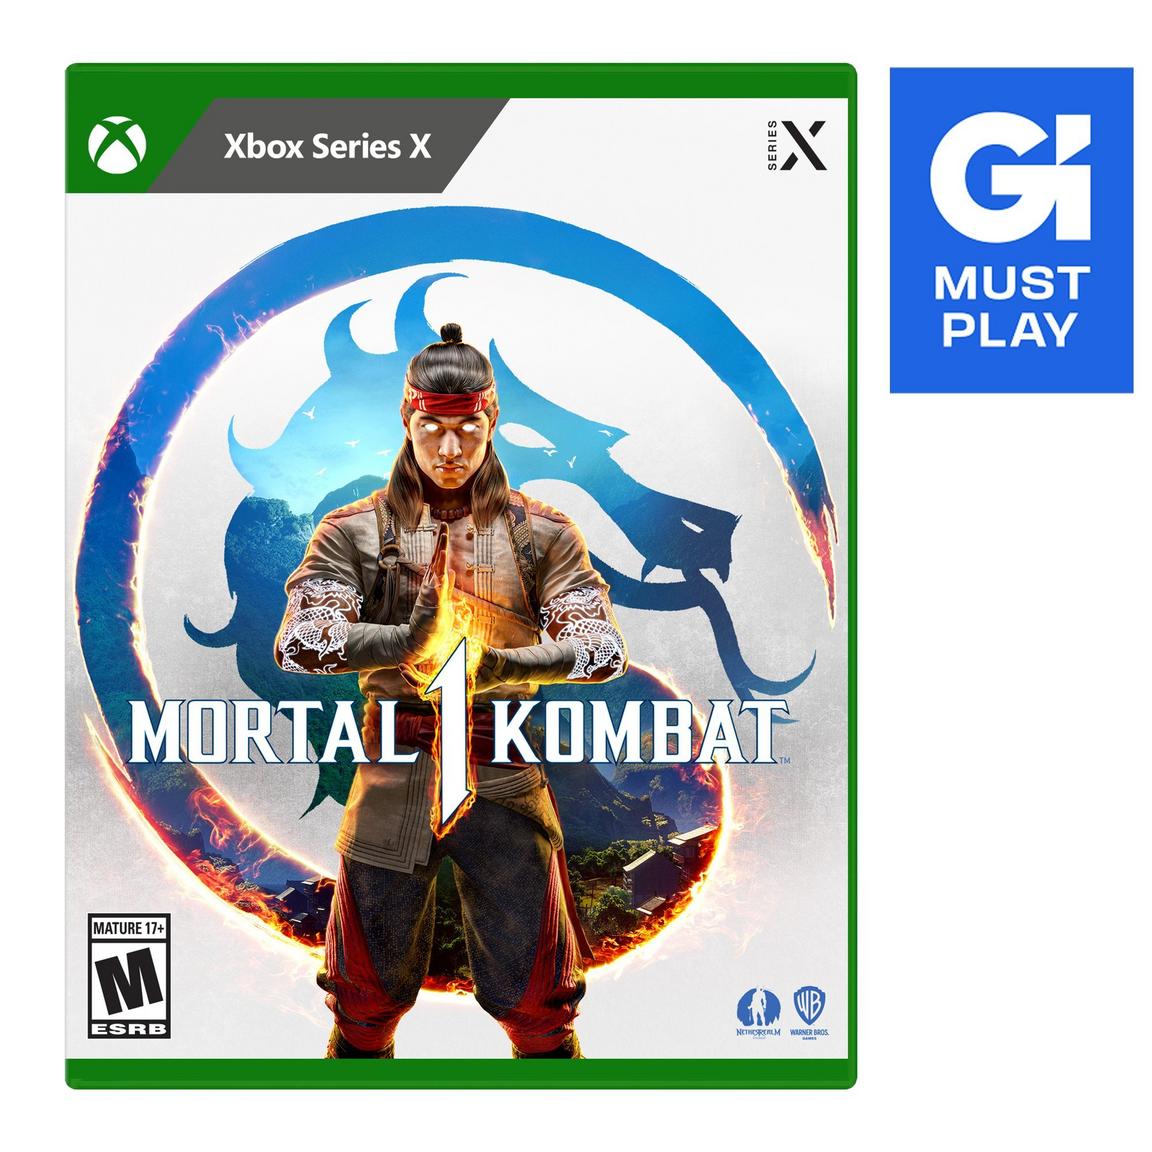 Видеоигра Mortal Kombat 1 - Xbox Series X игра xbox one mortal kombat 1 премиальное издание для xbox series x